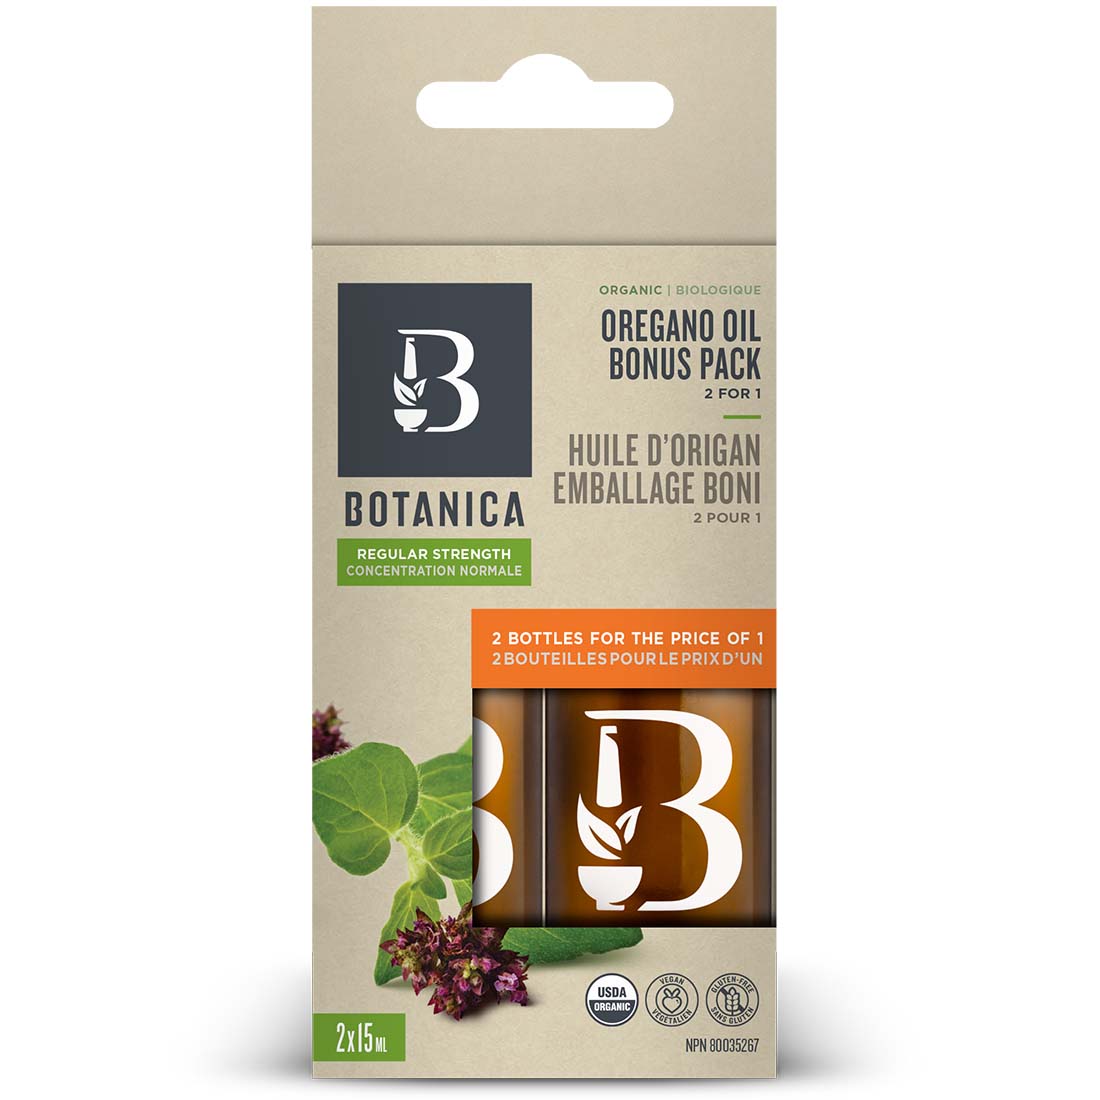 Botanica Organic Oregano Oil Drops, Regular Strength 1:3, 75-85% Carvacrol